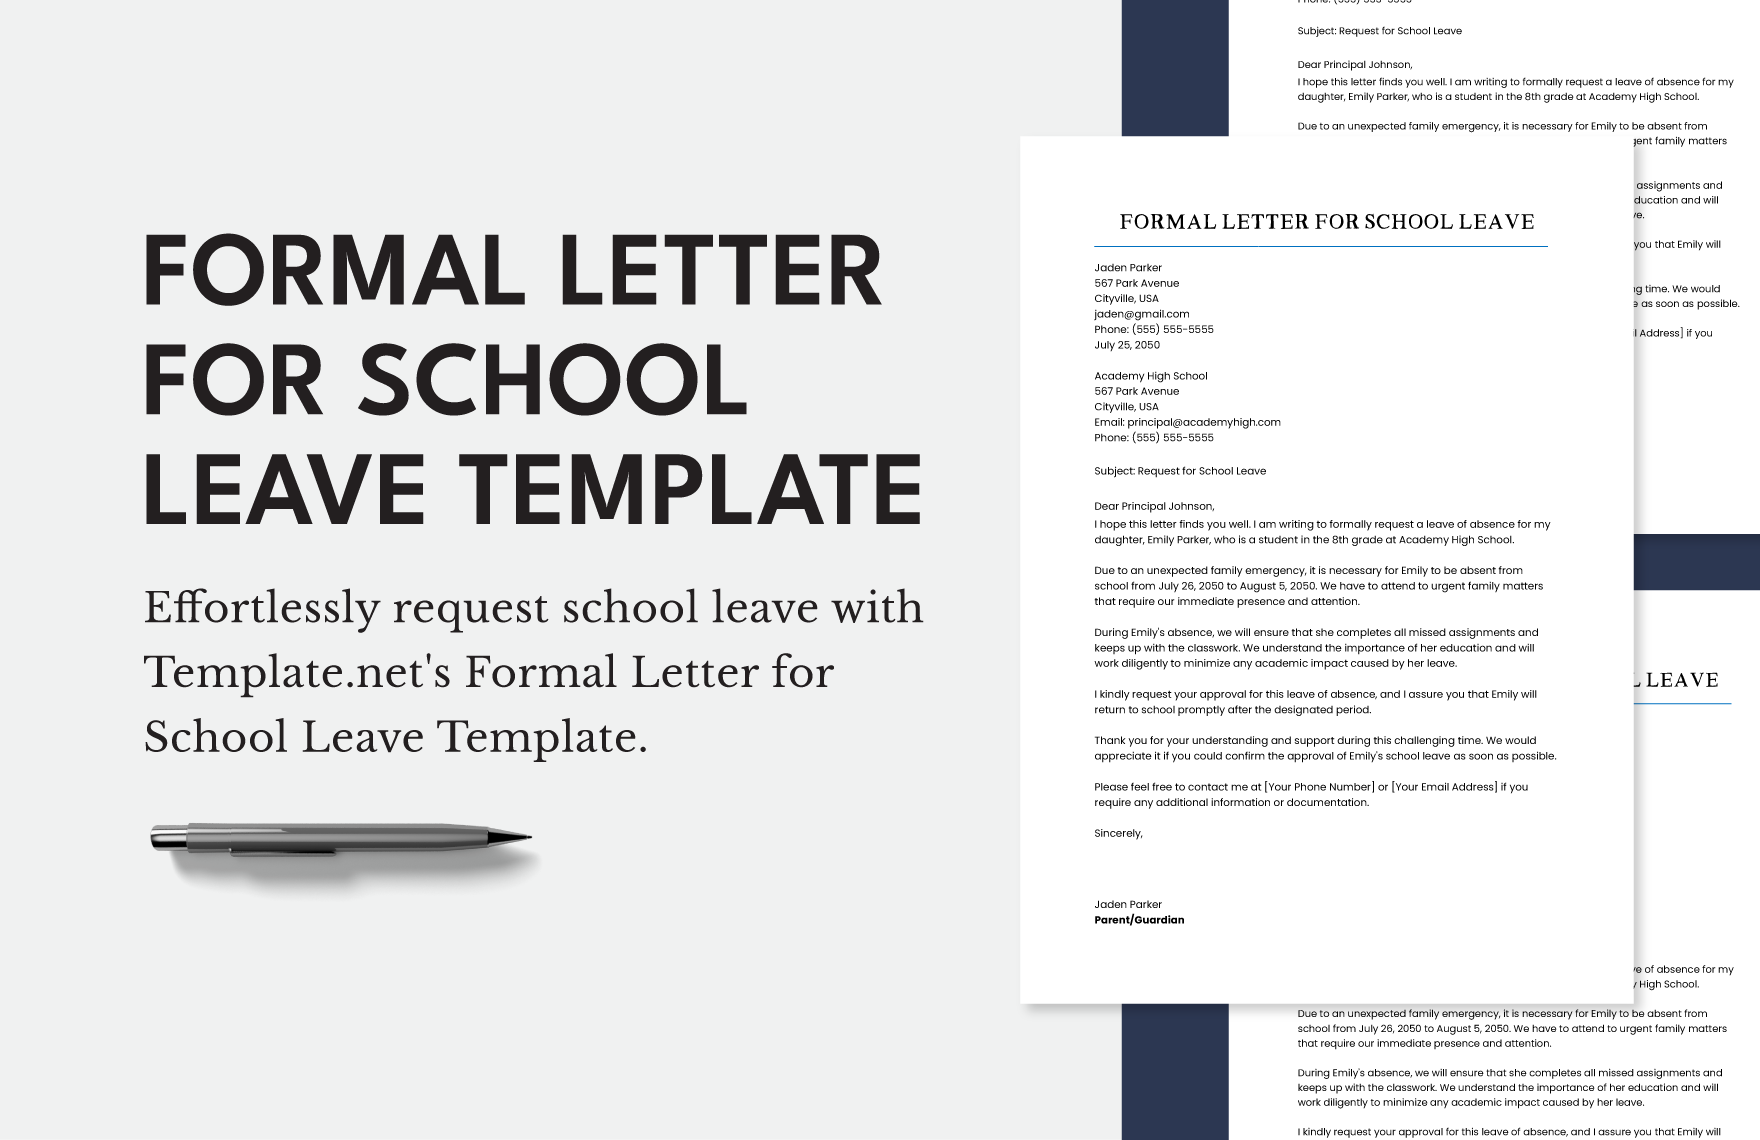 Formal Letter for School Leave Template